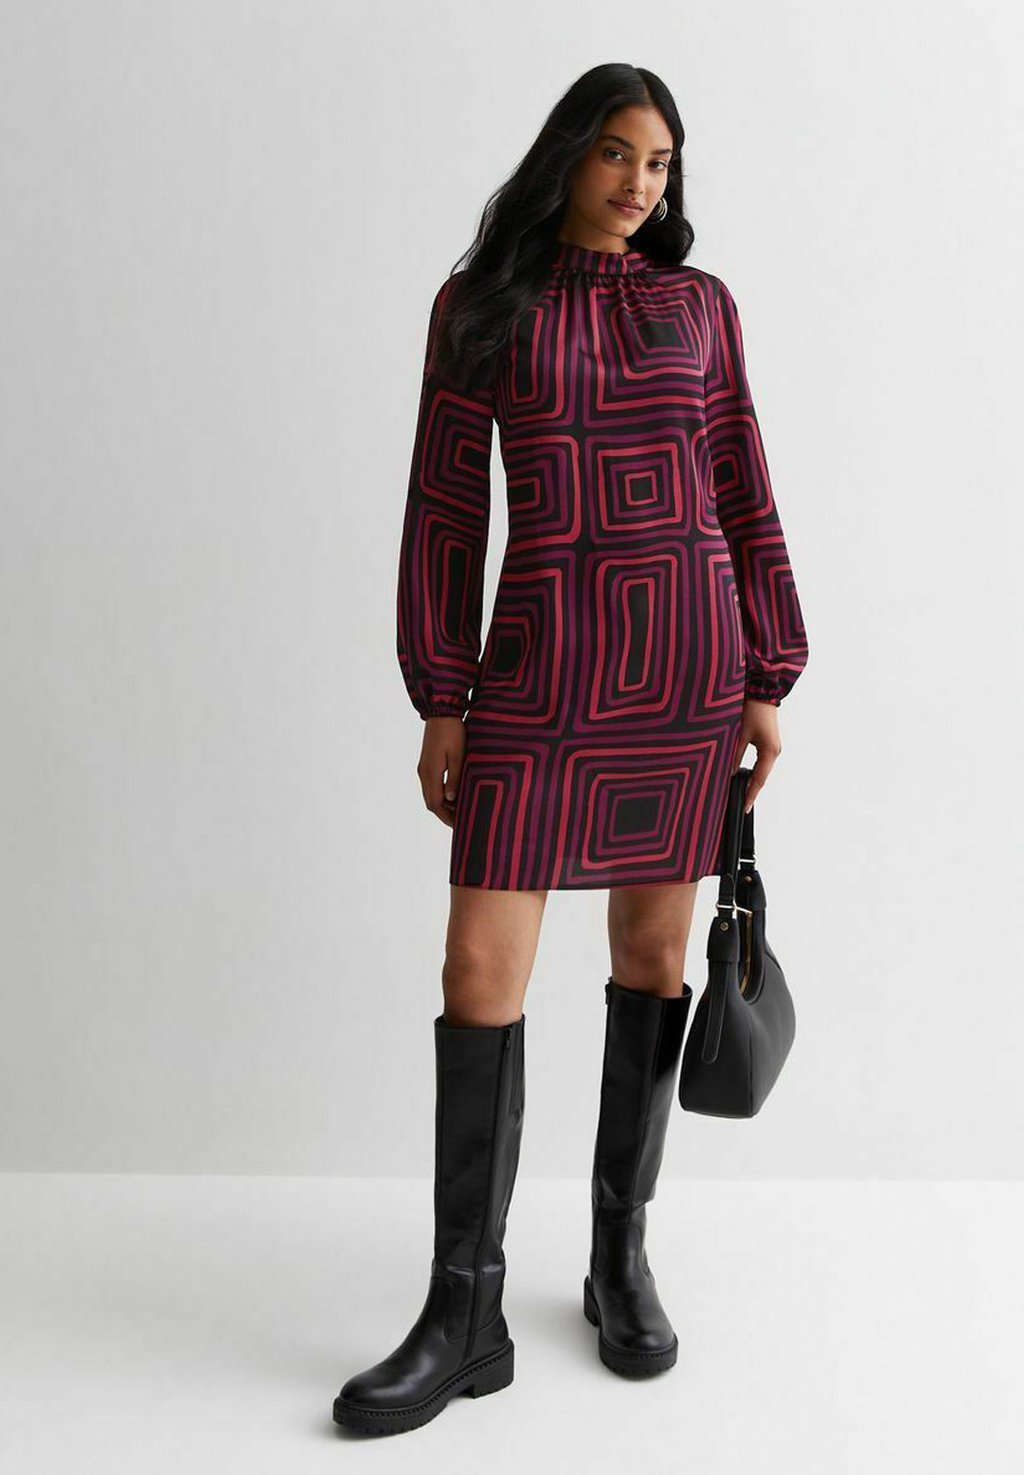 Летнее платье Square New Look, цвет red pattern pattern knitwear women s hooded knitwear coat dark red standard pattern plaid pattern long sleeve form 100% wool fabric